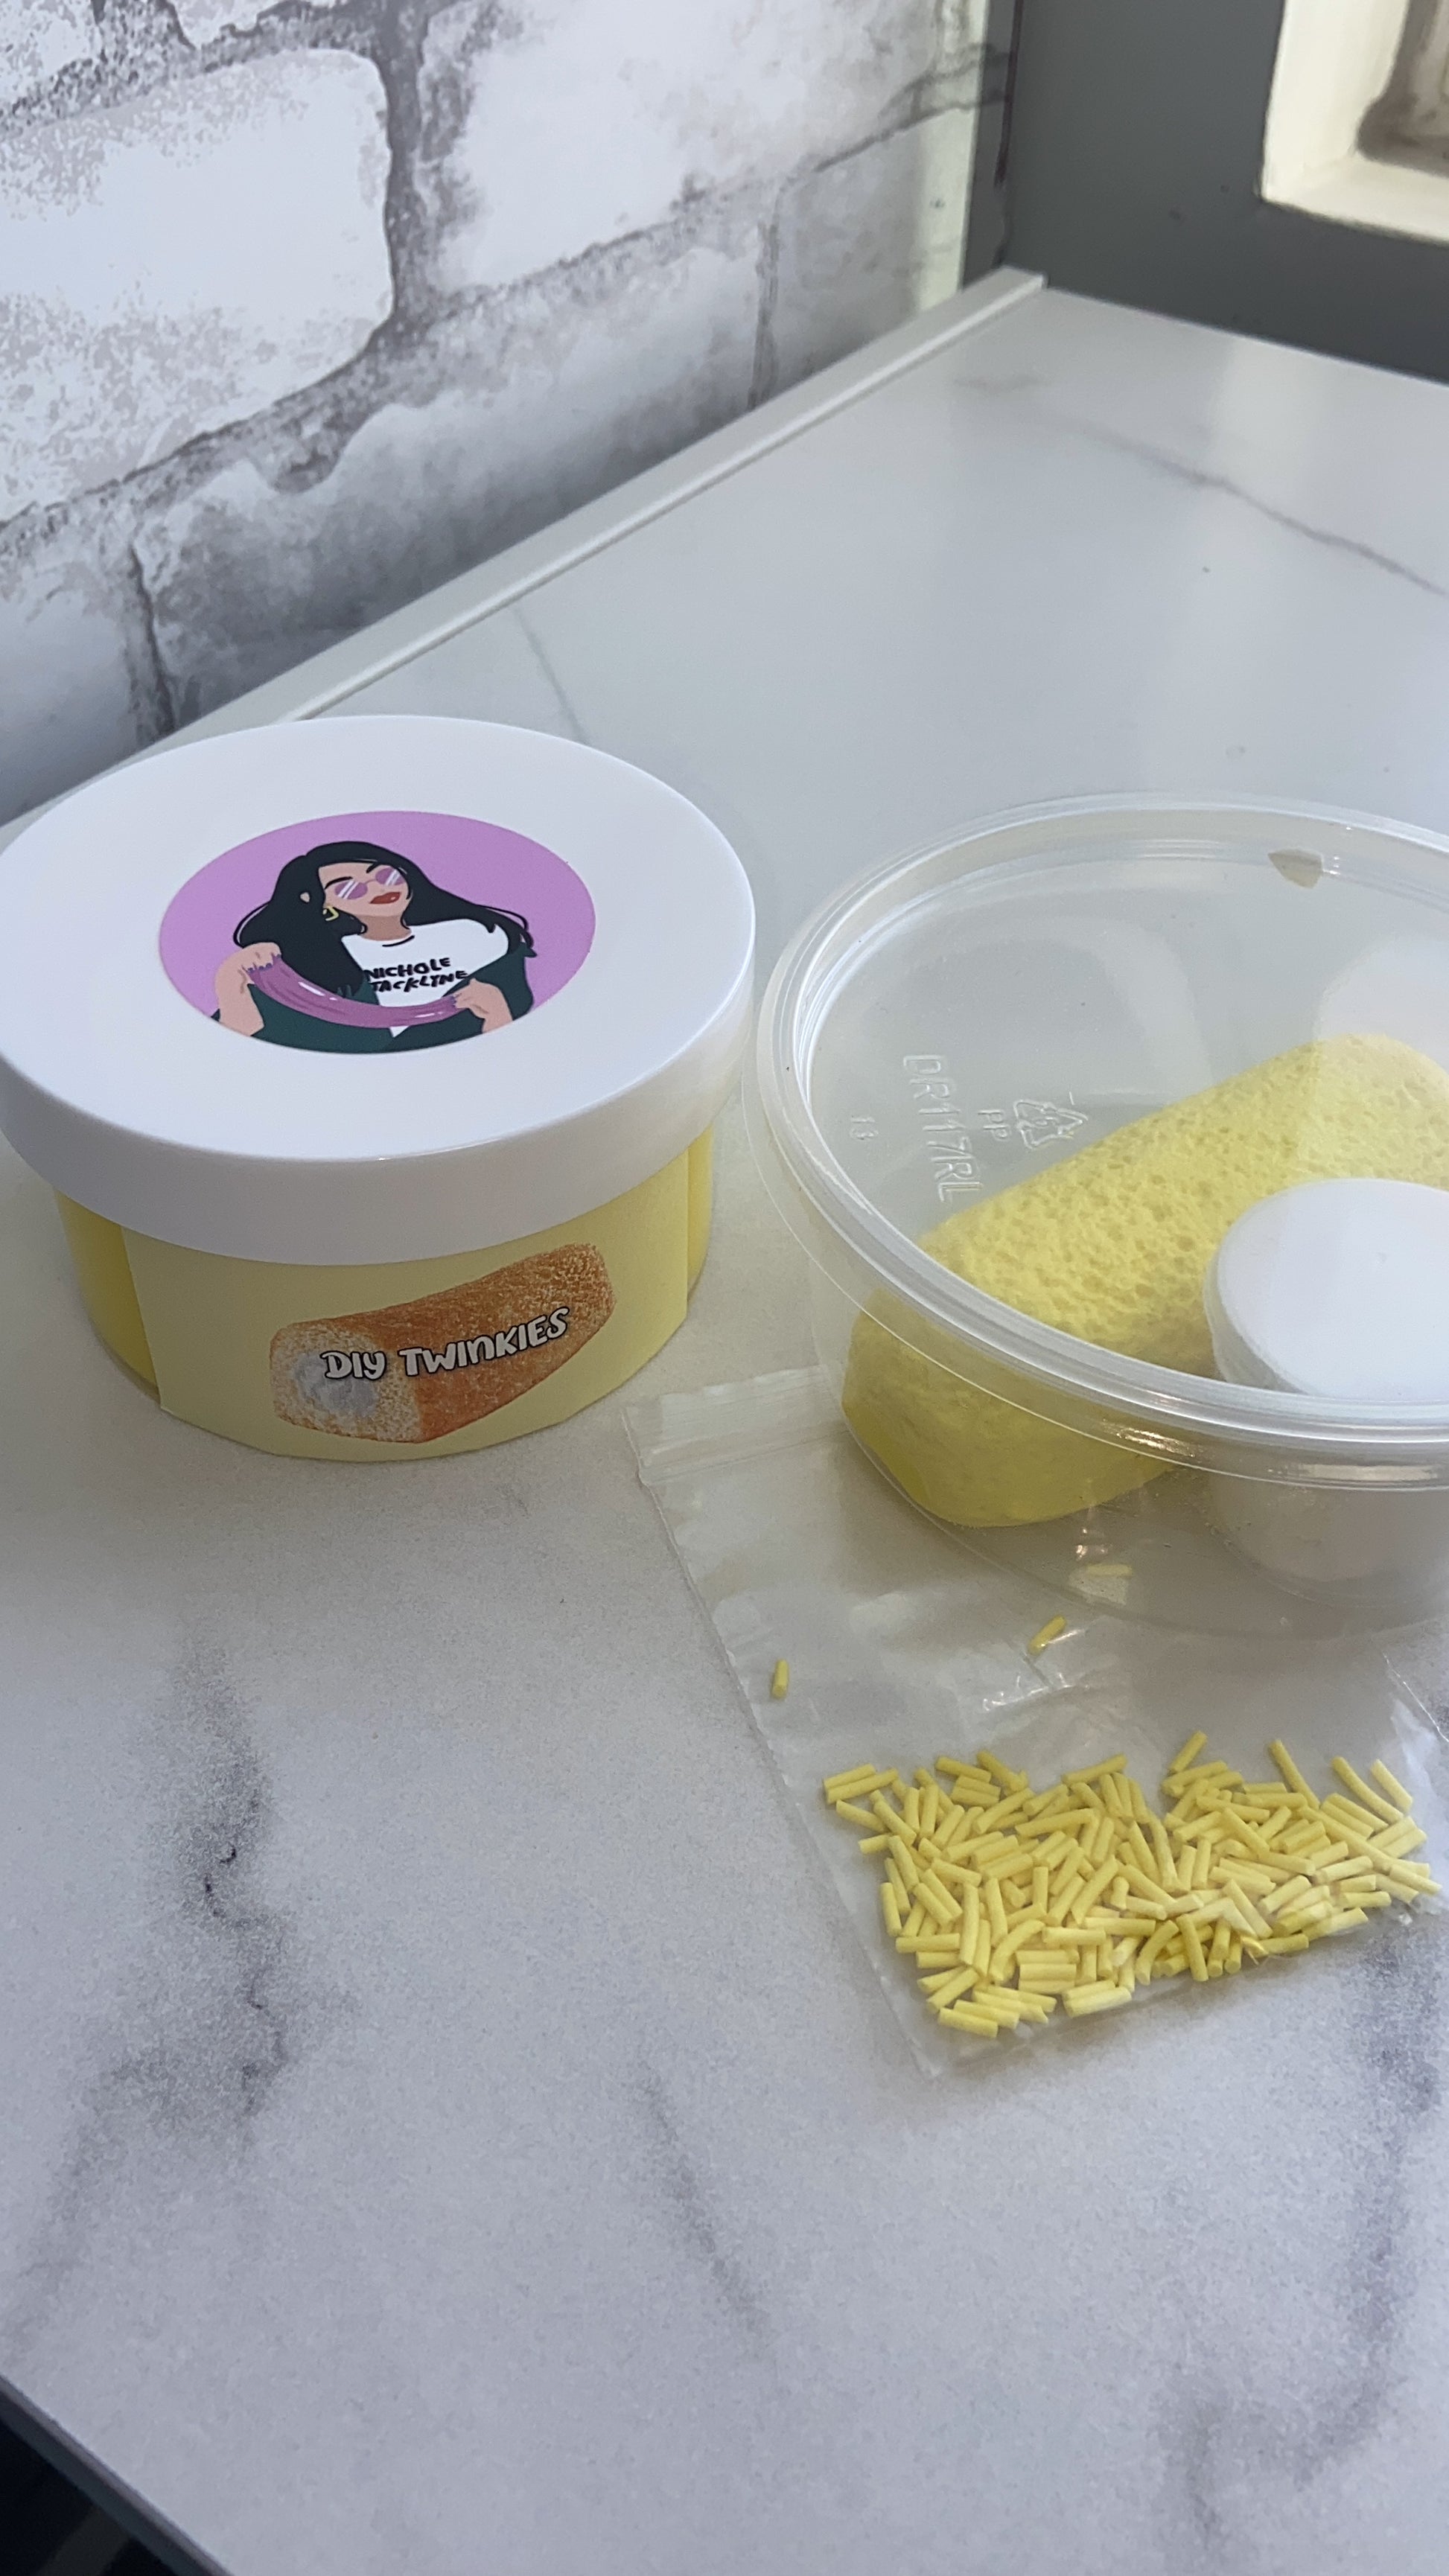 Mystery Slime Box with 5 Slimes DIY – Shop Nichole Jacklyne